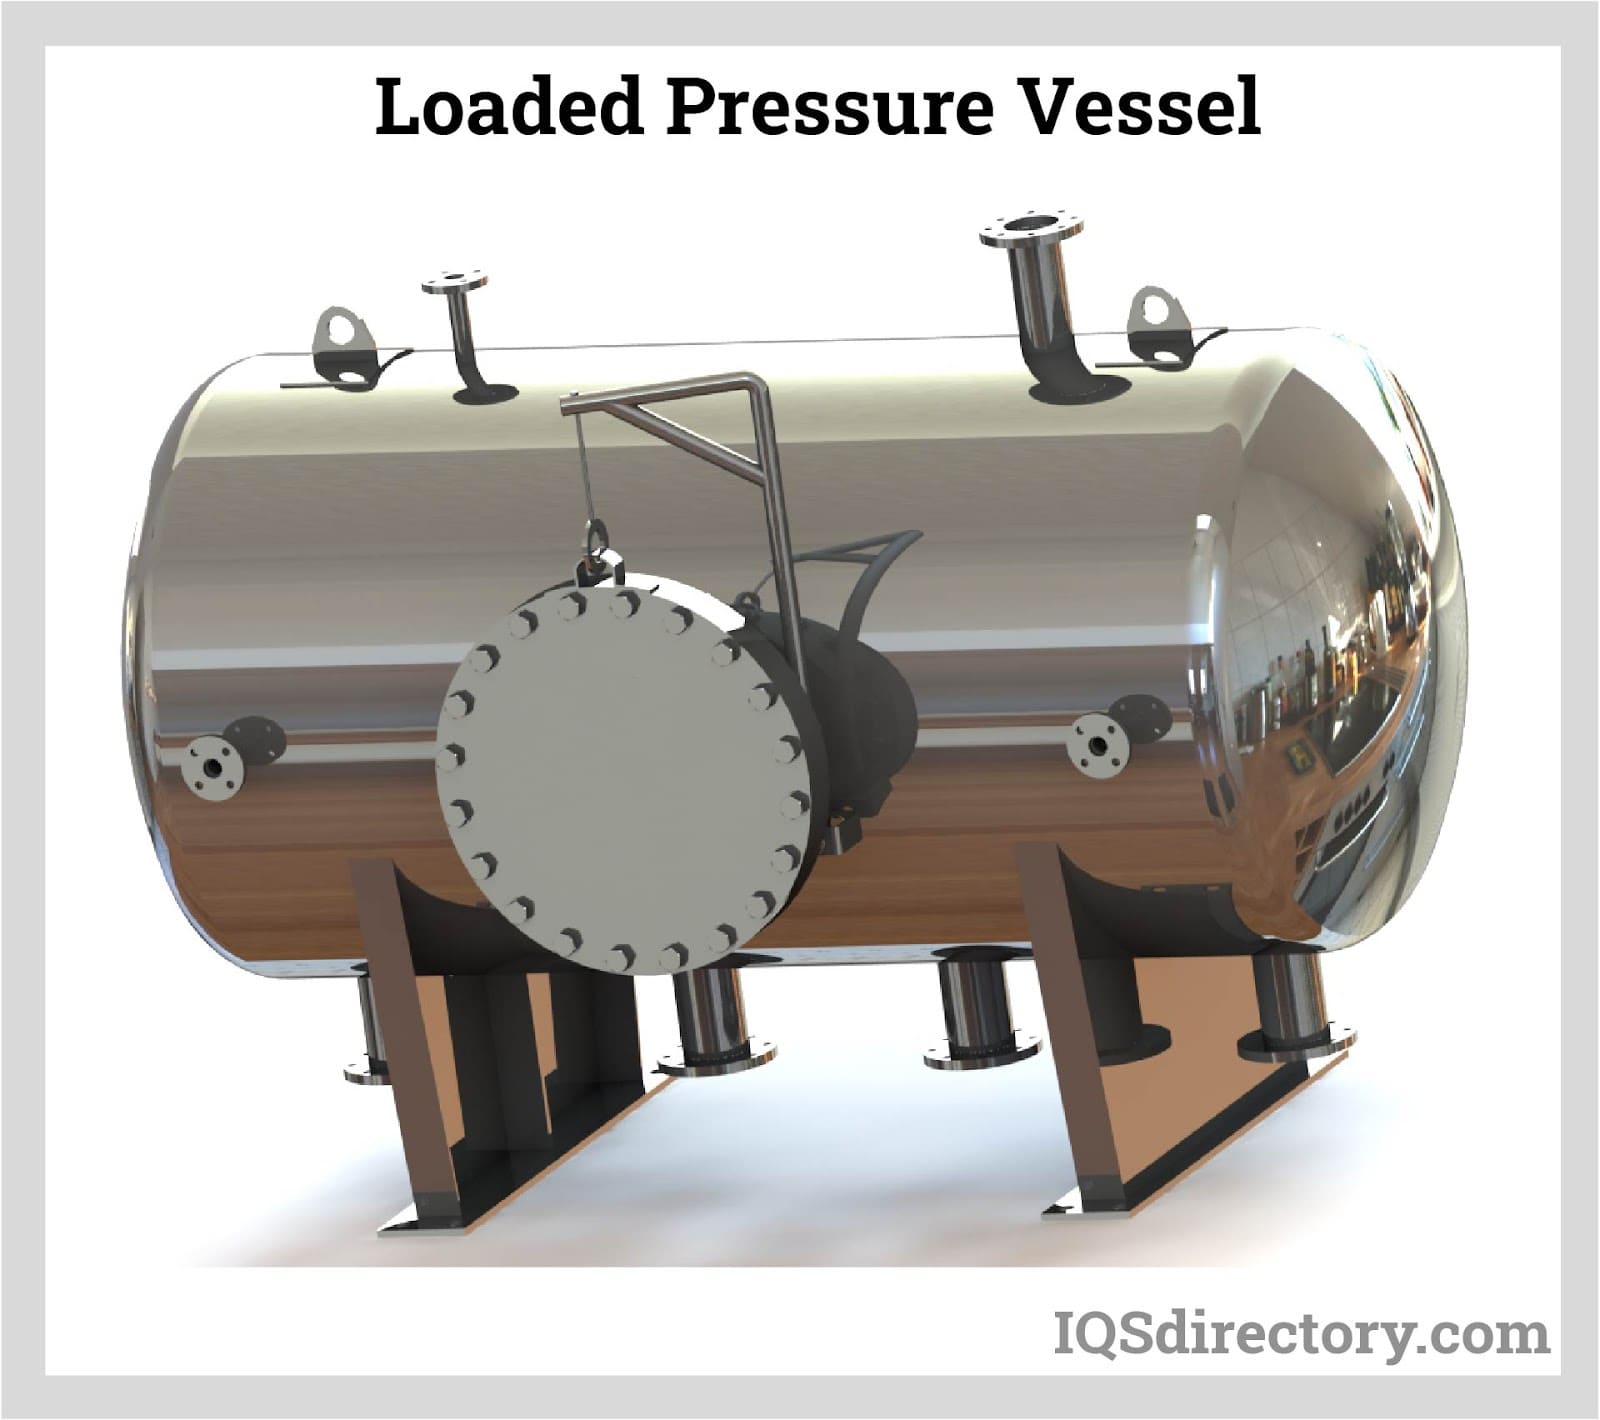 Loaded Pressure Vessel